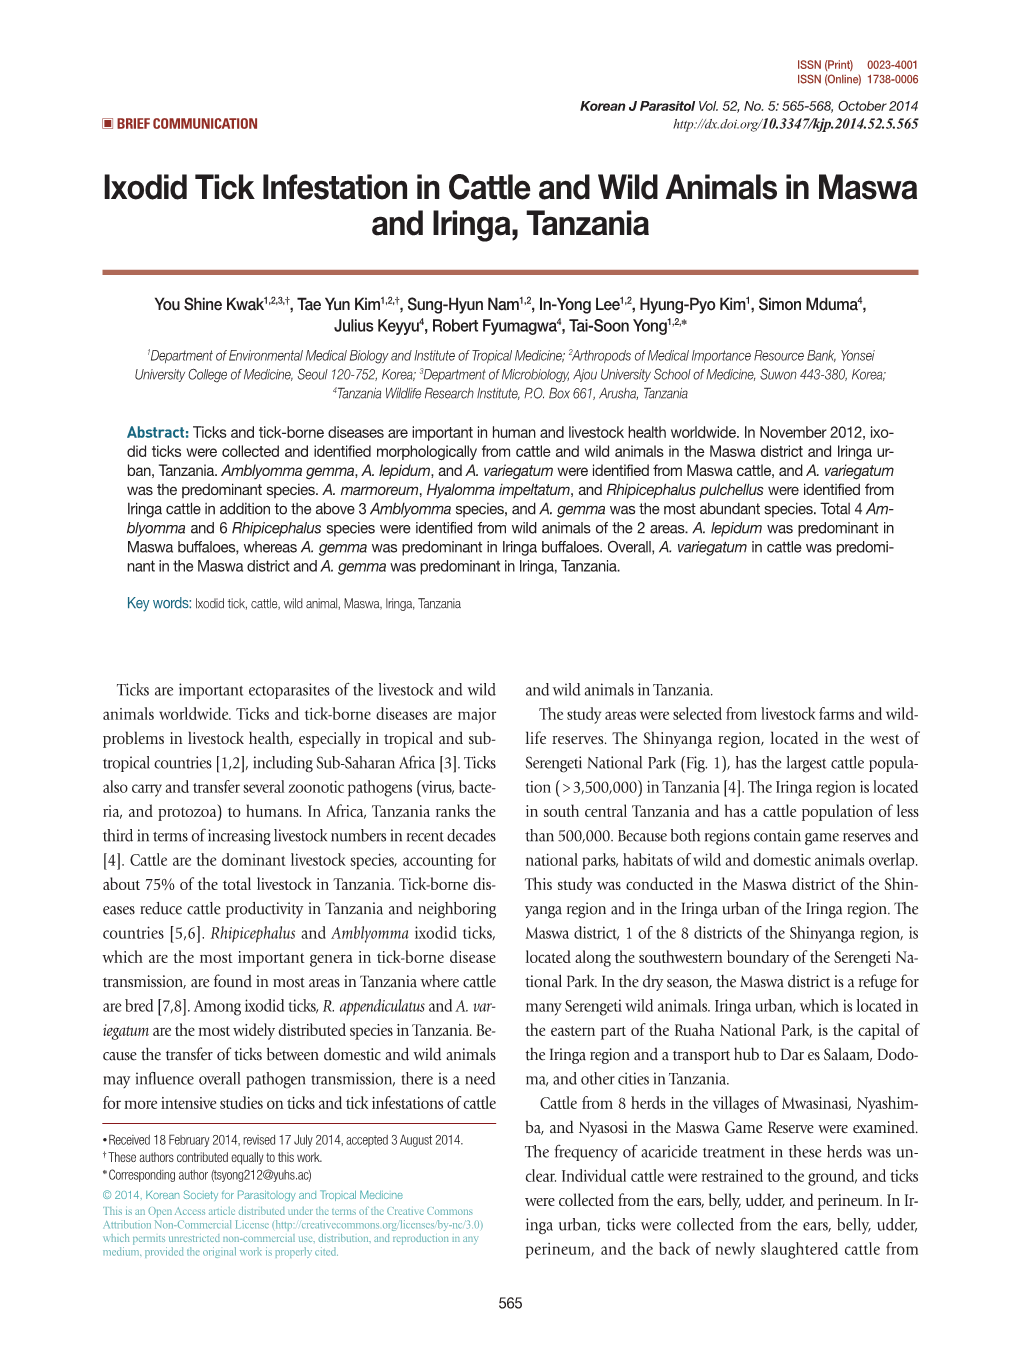 Ixodid Tick Infestation in Cattle and Wild Animals in Maswa and Iringa, Tanzania